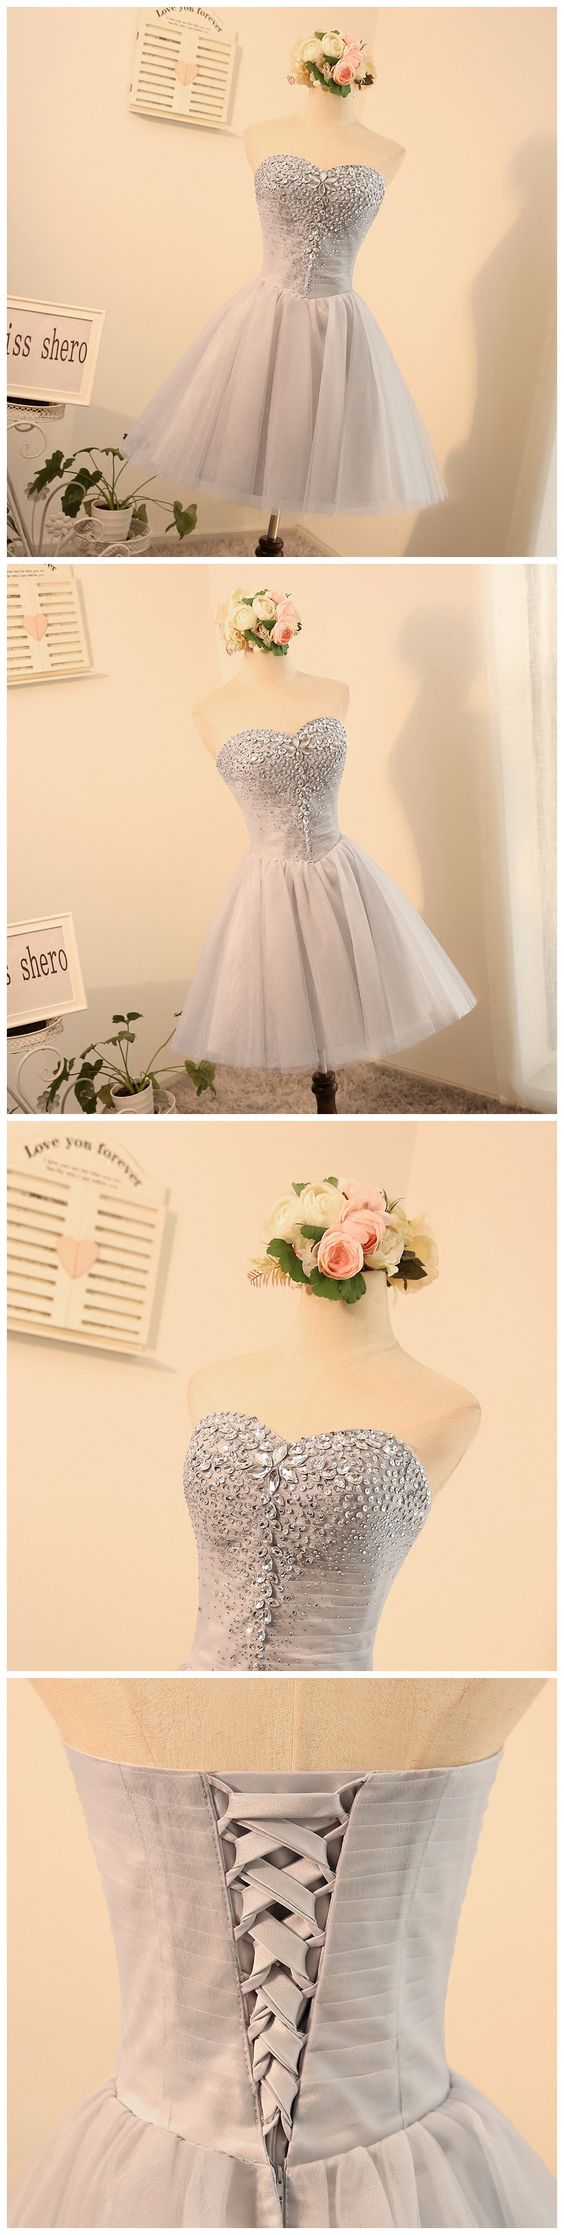 A-line Homecoming Dress,Sweetheart Homecoming Dress,Short Dress,Homecoming Dresses cg1049